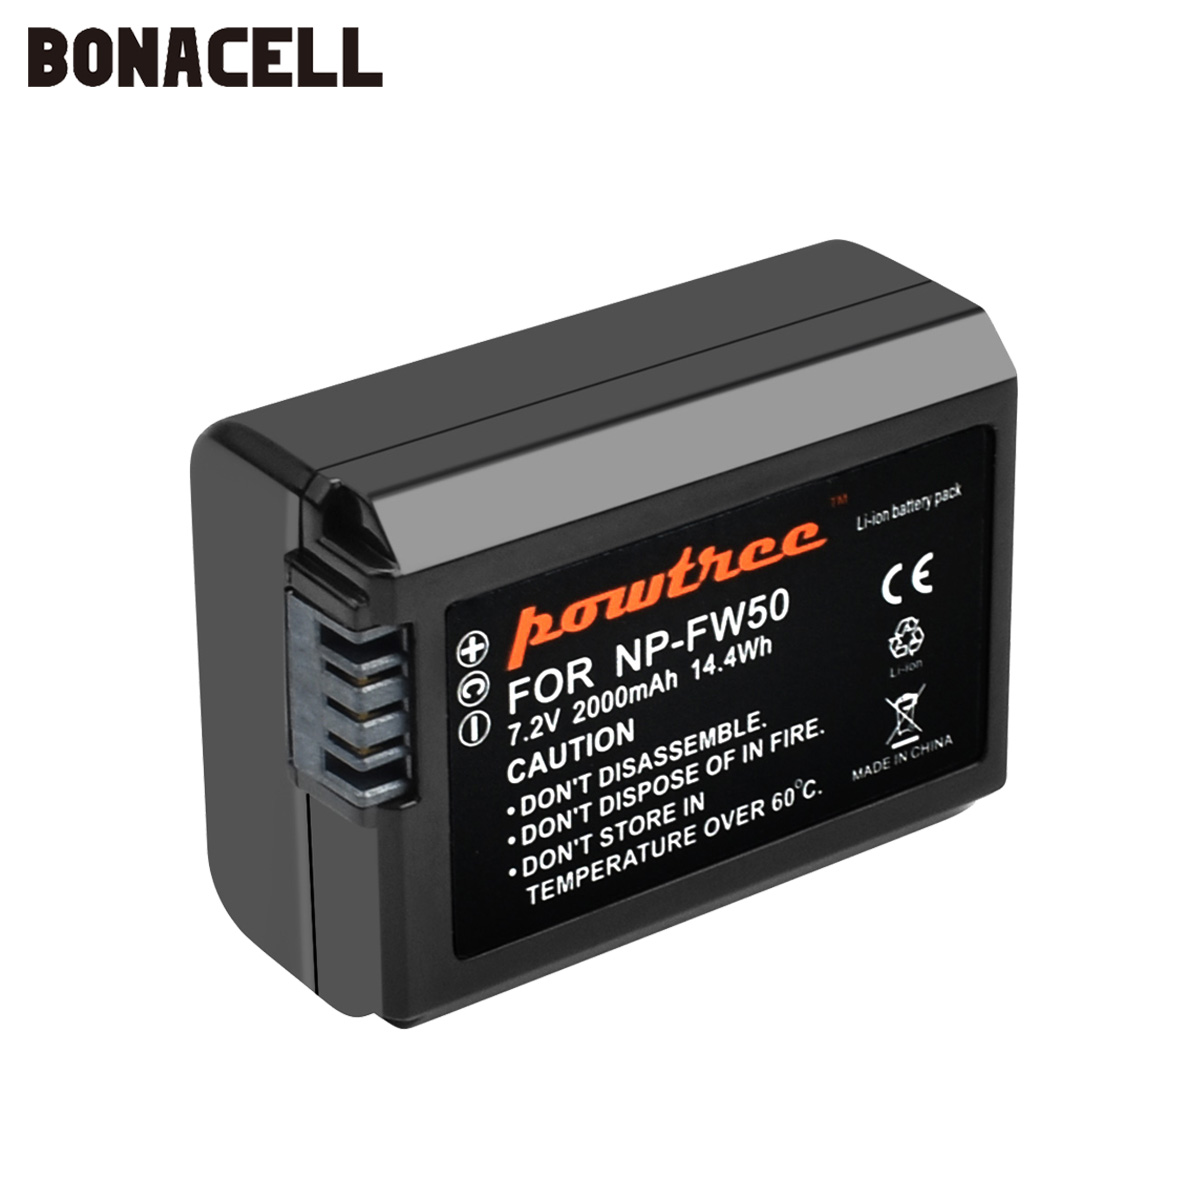 Bonacell 2000mah NP-FW50 NP FW50 batería AKKU para Sony NEX-7 NEX-5N NEX-5R NEX-F3 NEX-3D alfa a5000 a6000 DSC-RX10 Alpha 7 a7II